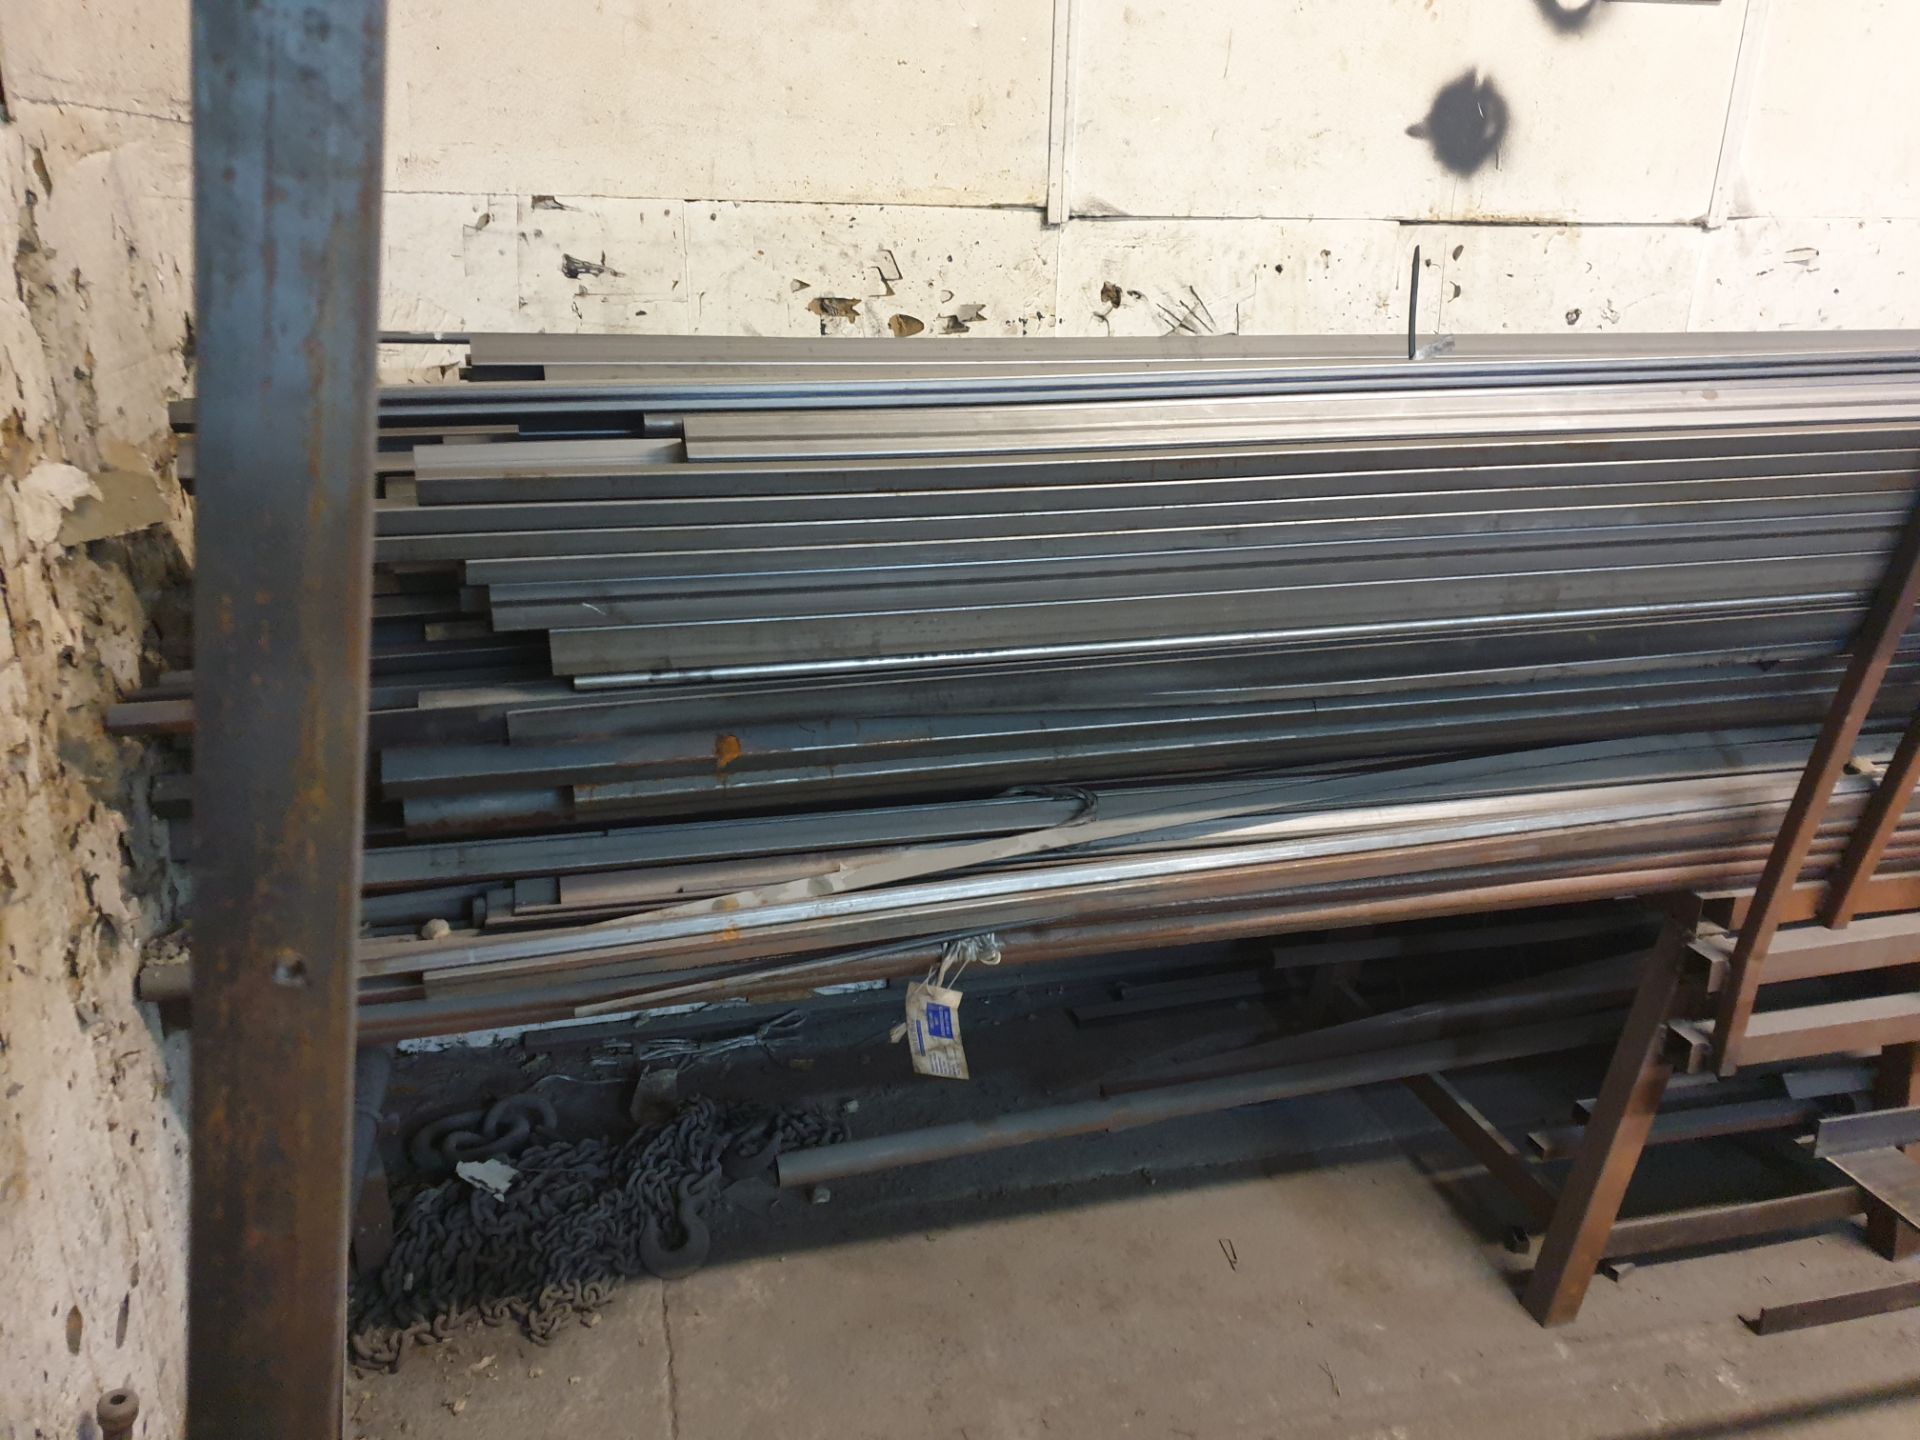 Steel stock to include steel rack - Image 4 of 5